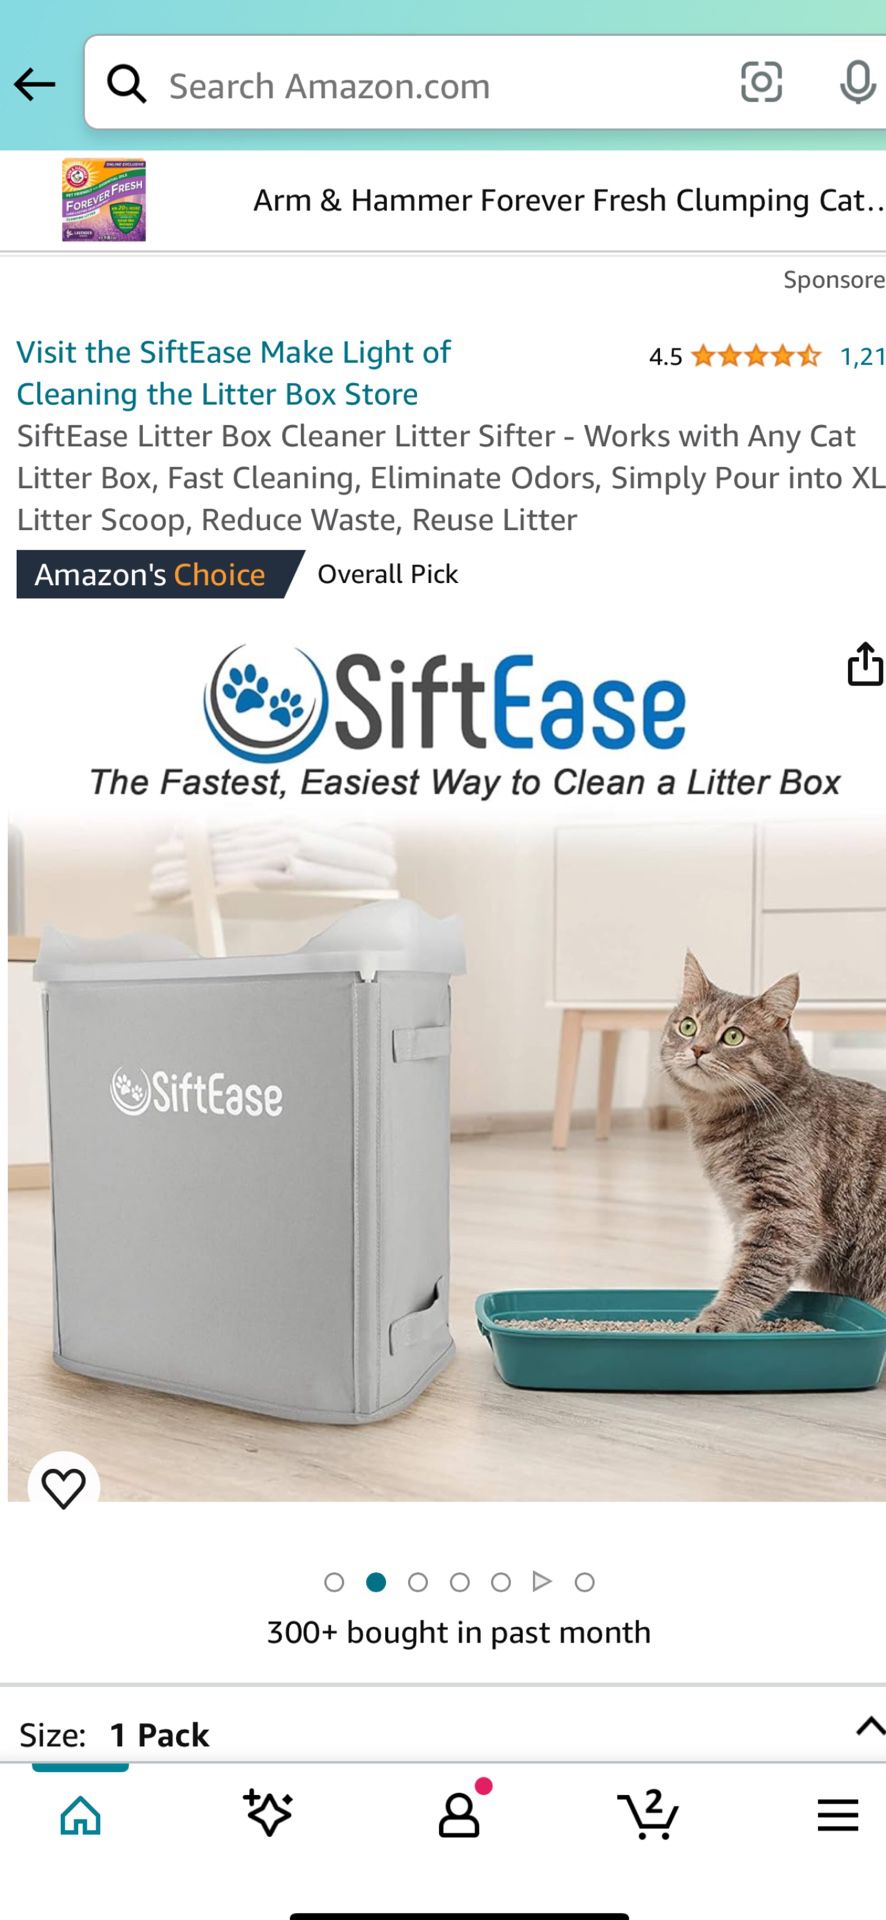 Siftease Cat Litter Box Sifter